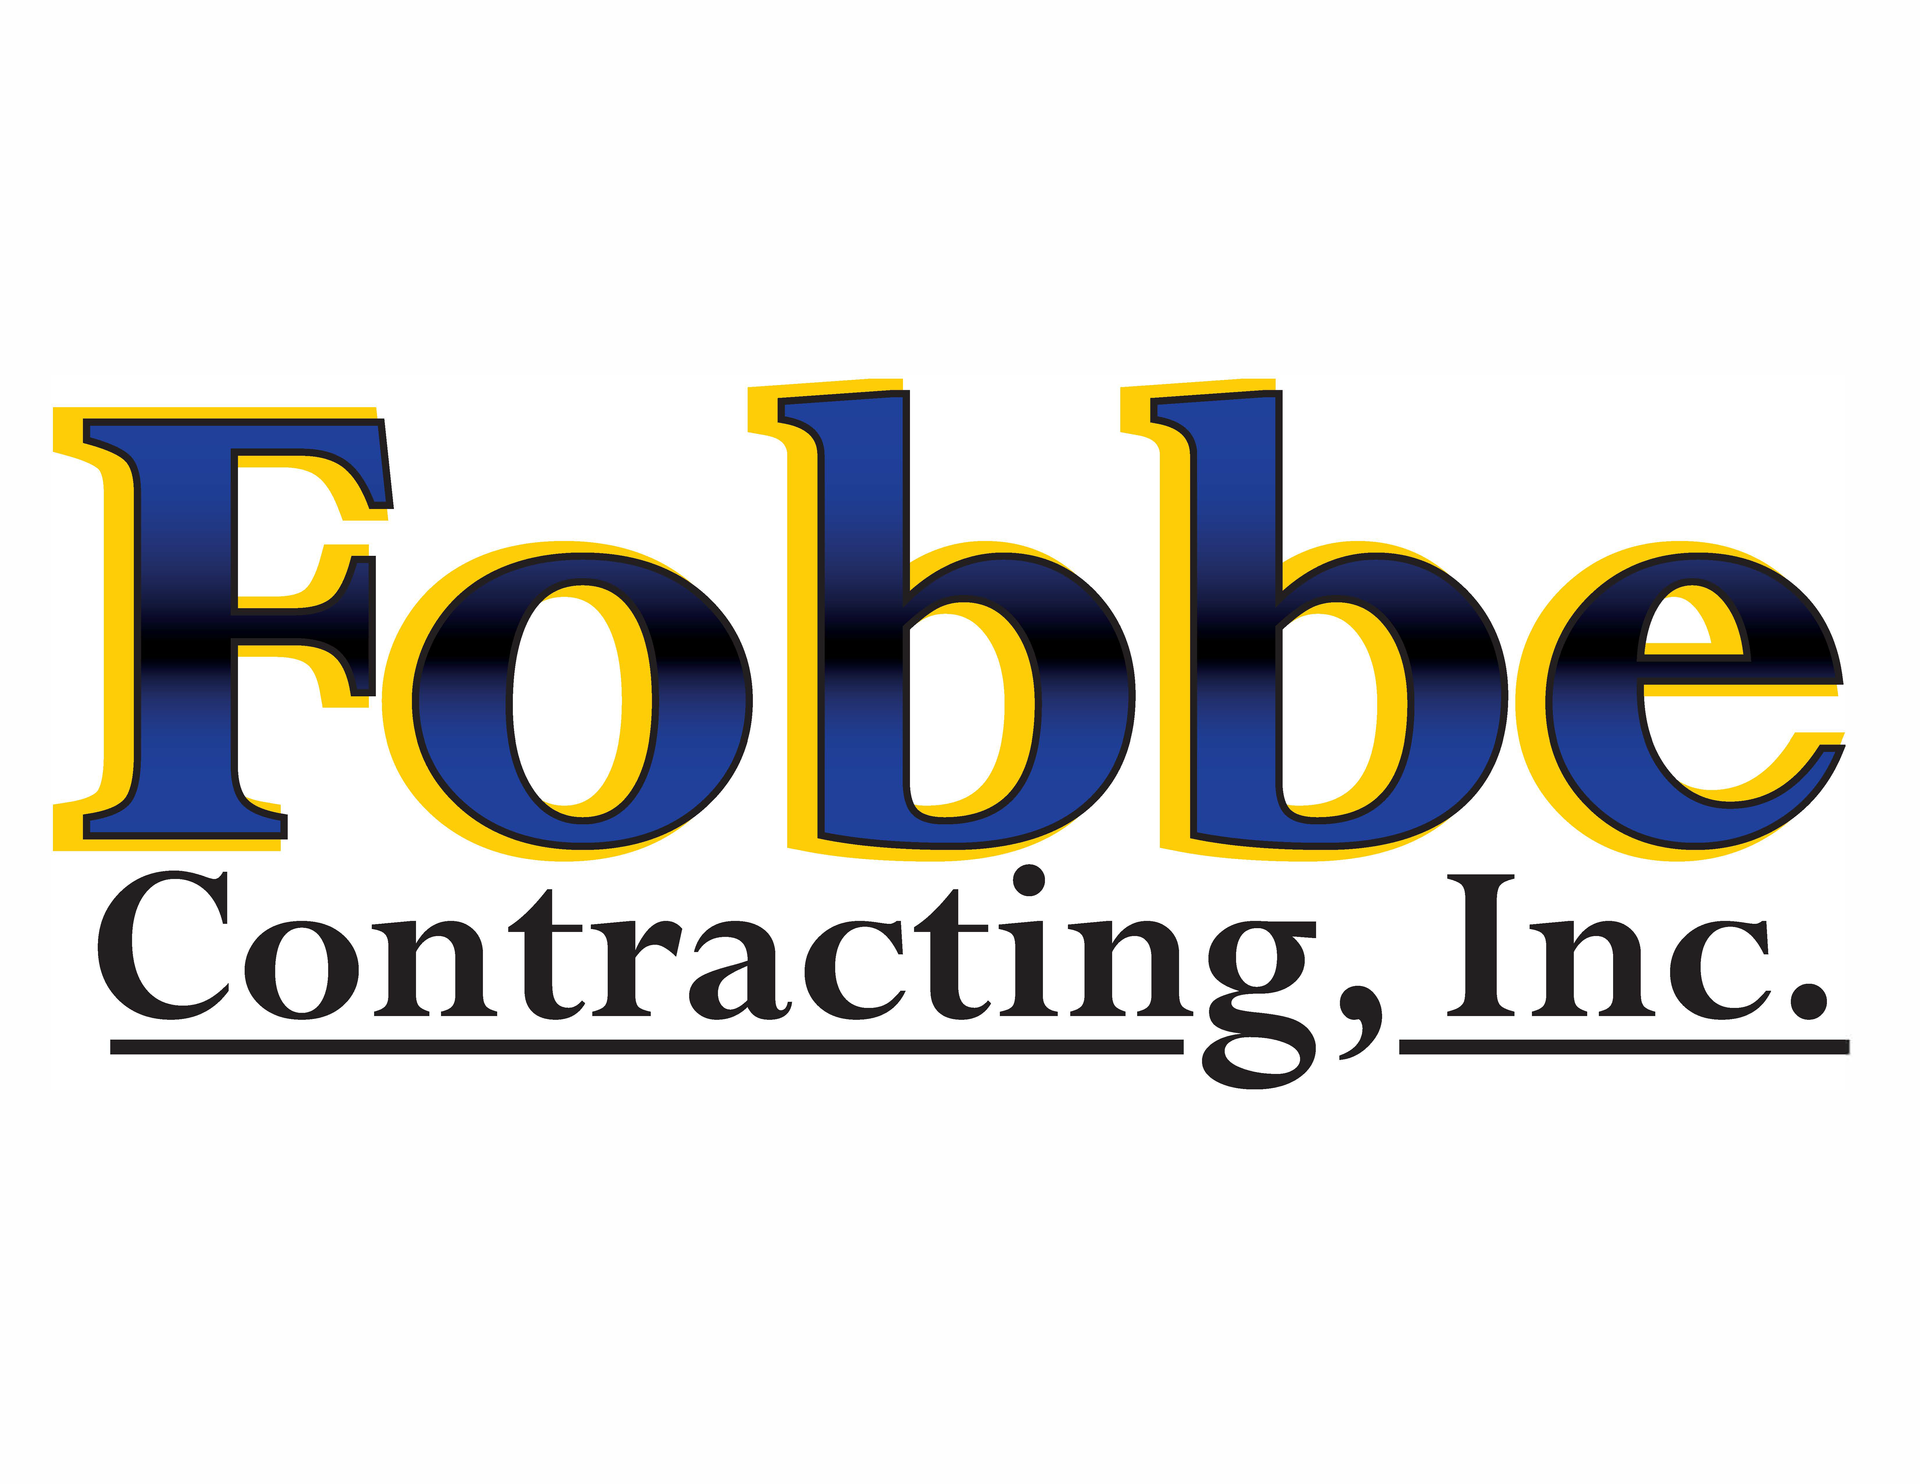 Fobbe-Contracting-Inc.-LOGO